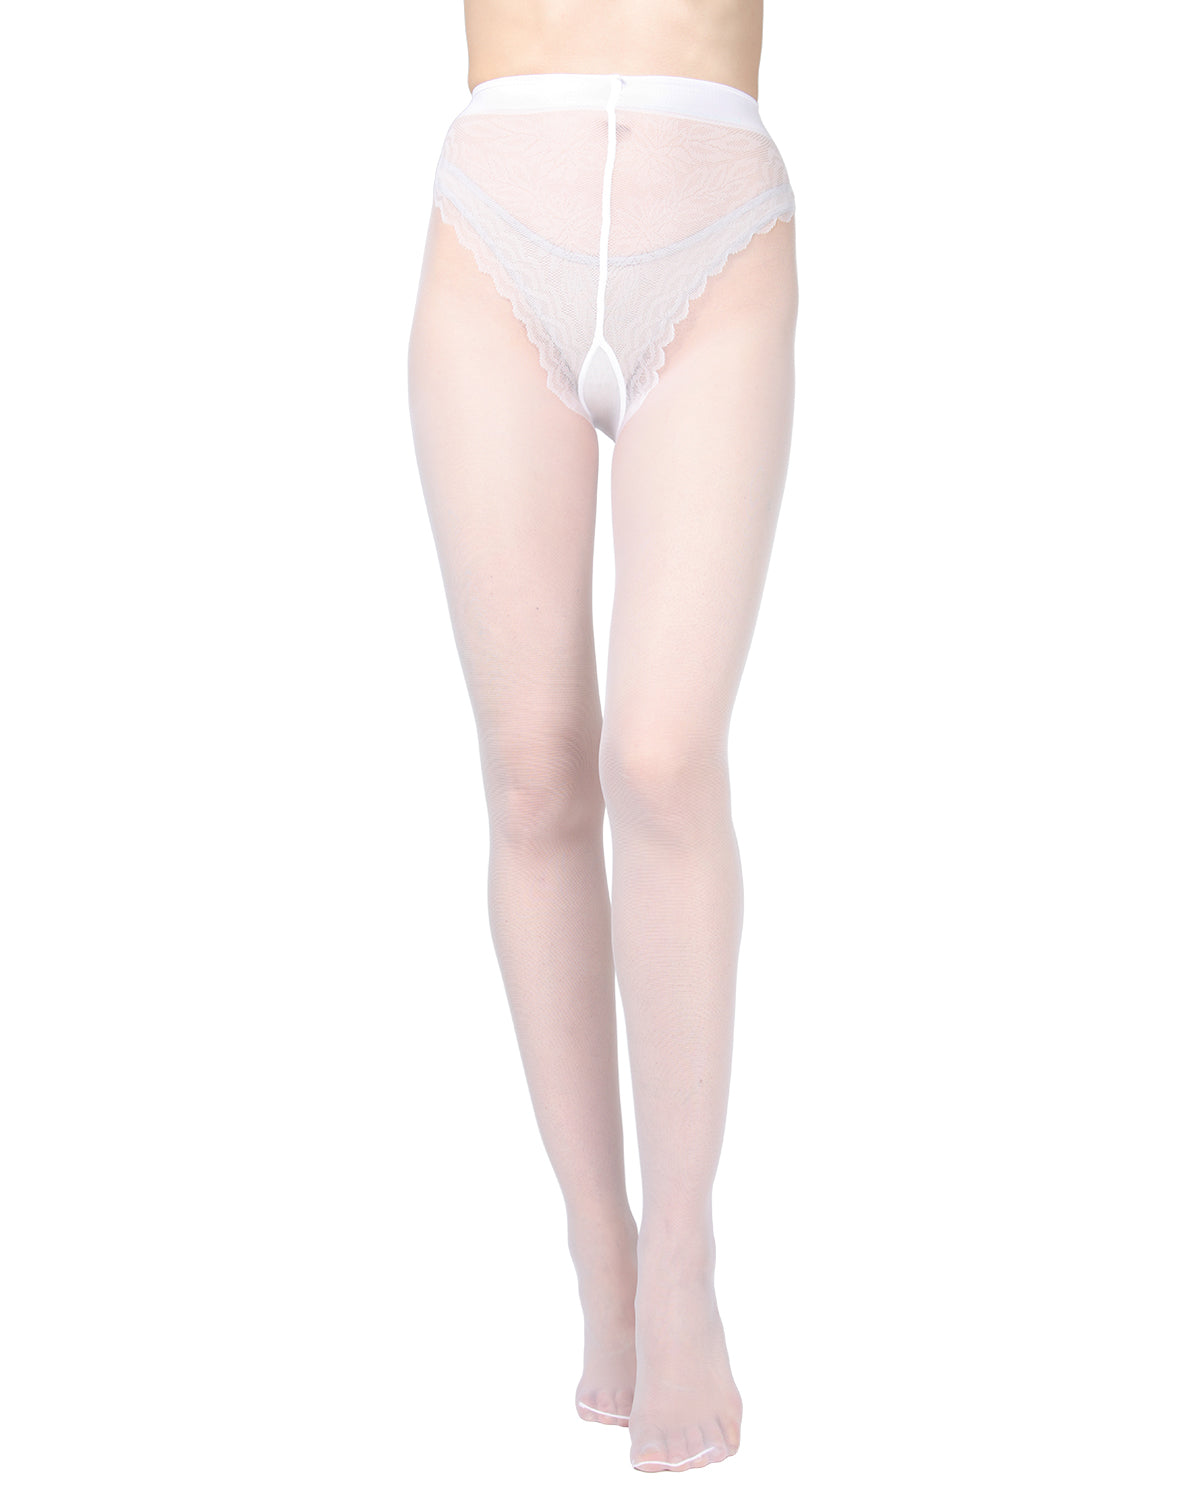 Buy Women's Nylon Low Waist Sheer See Through Bikini Lace Panty (White,  S)-PID40918_AG at